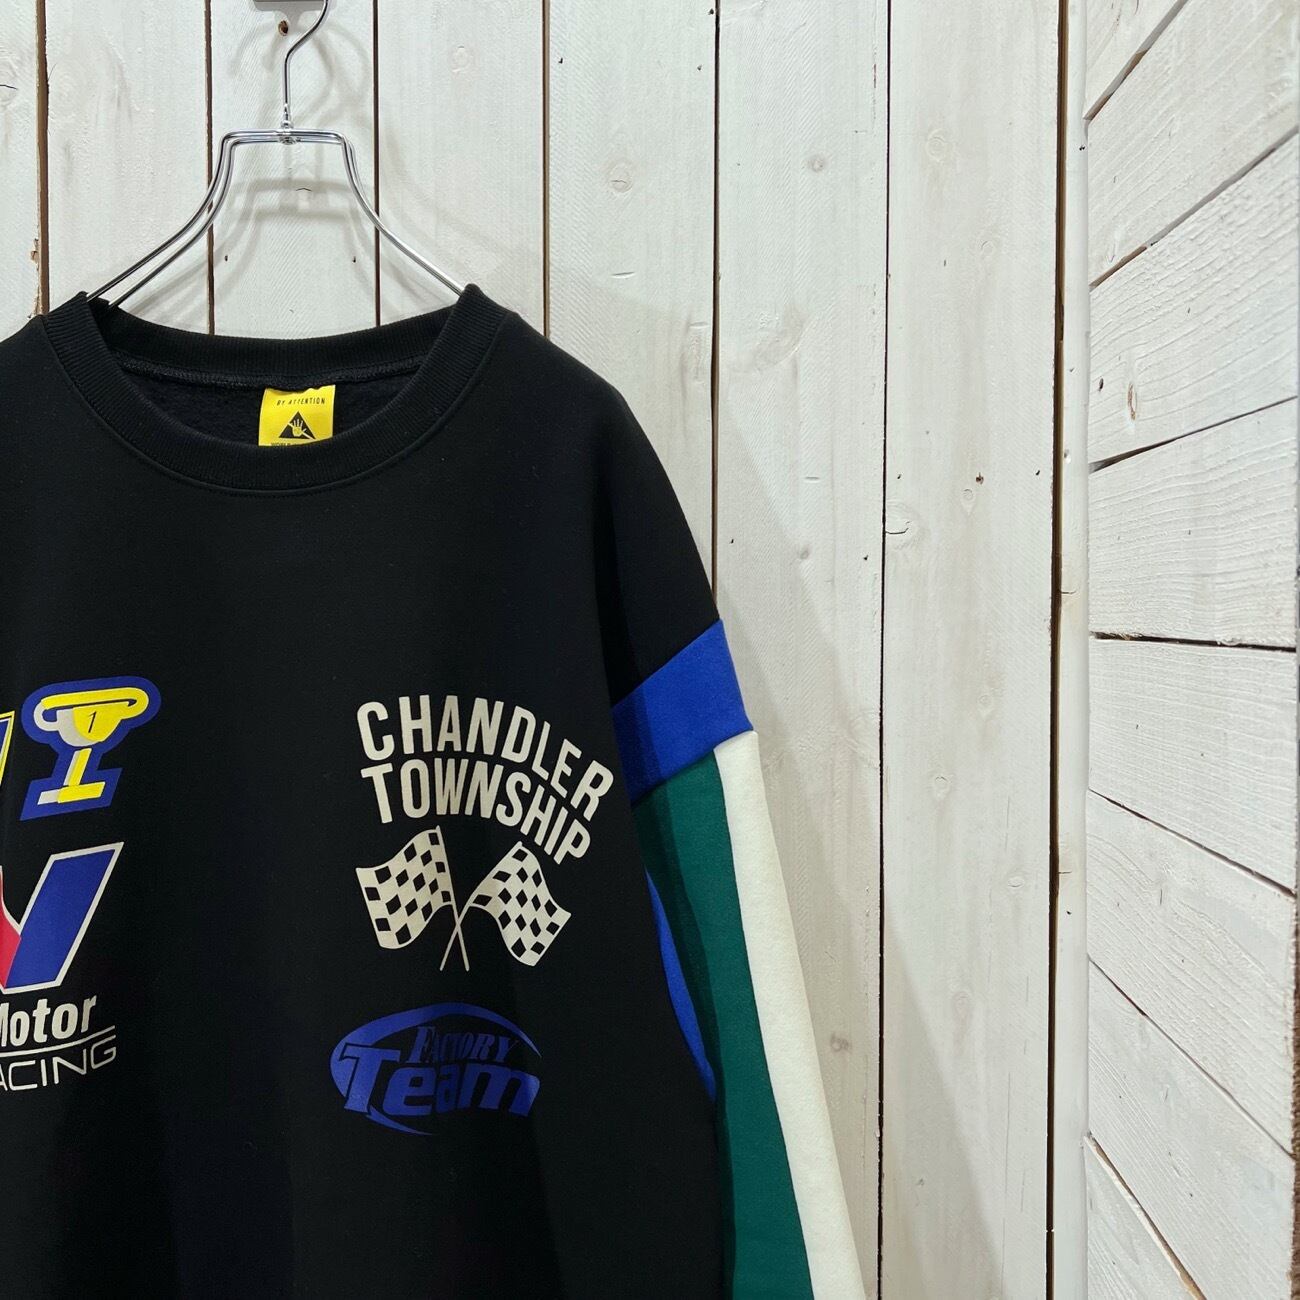 【VT-01225-2】Sleeve color scheme switching racing print sweatshirt / 袖 配色切替  レーシング プリント スウェット